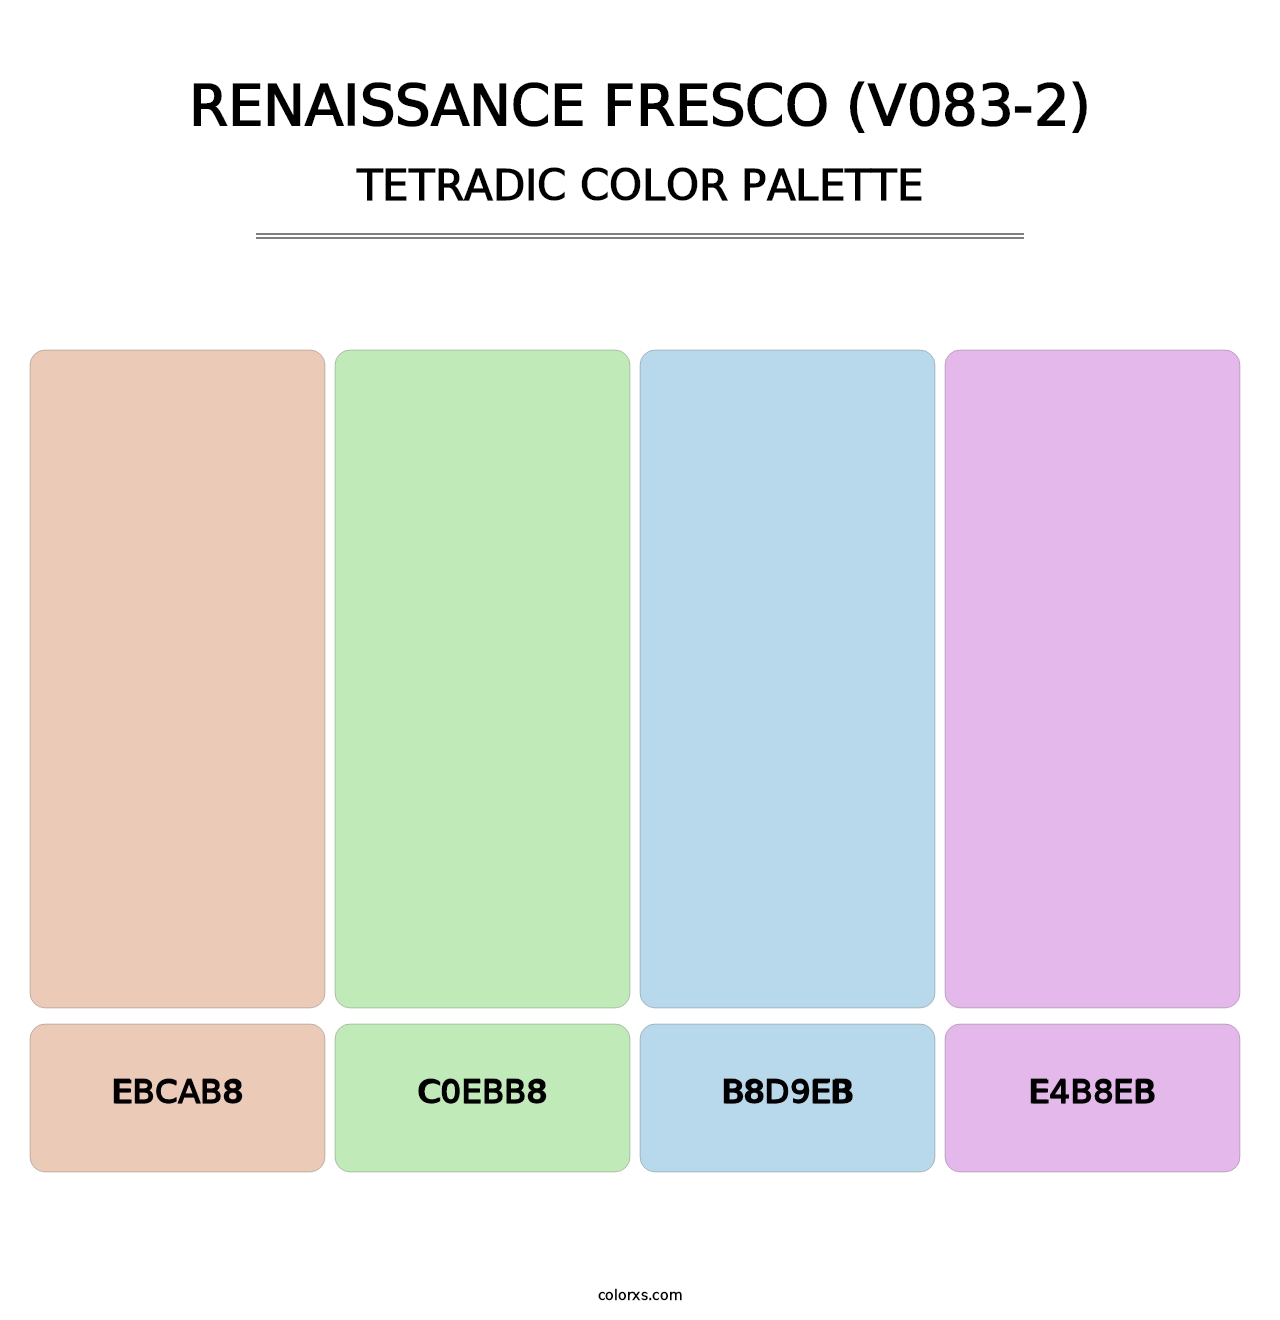 Renaissance Fresco (V083-2) - Tetradic Color Palette